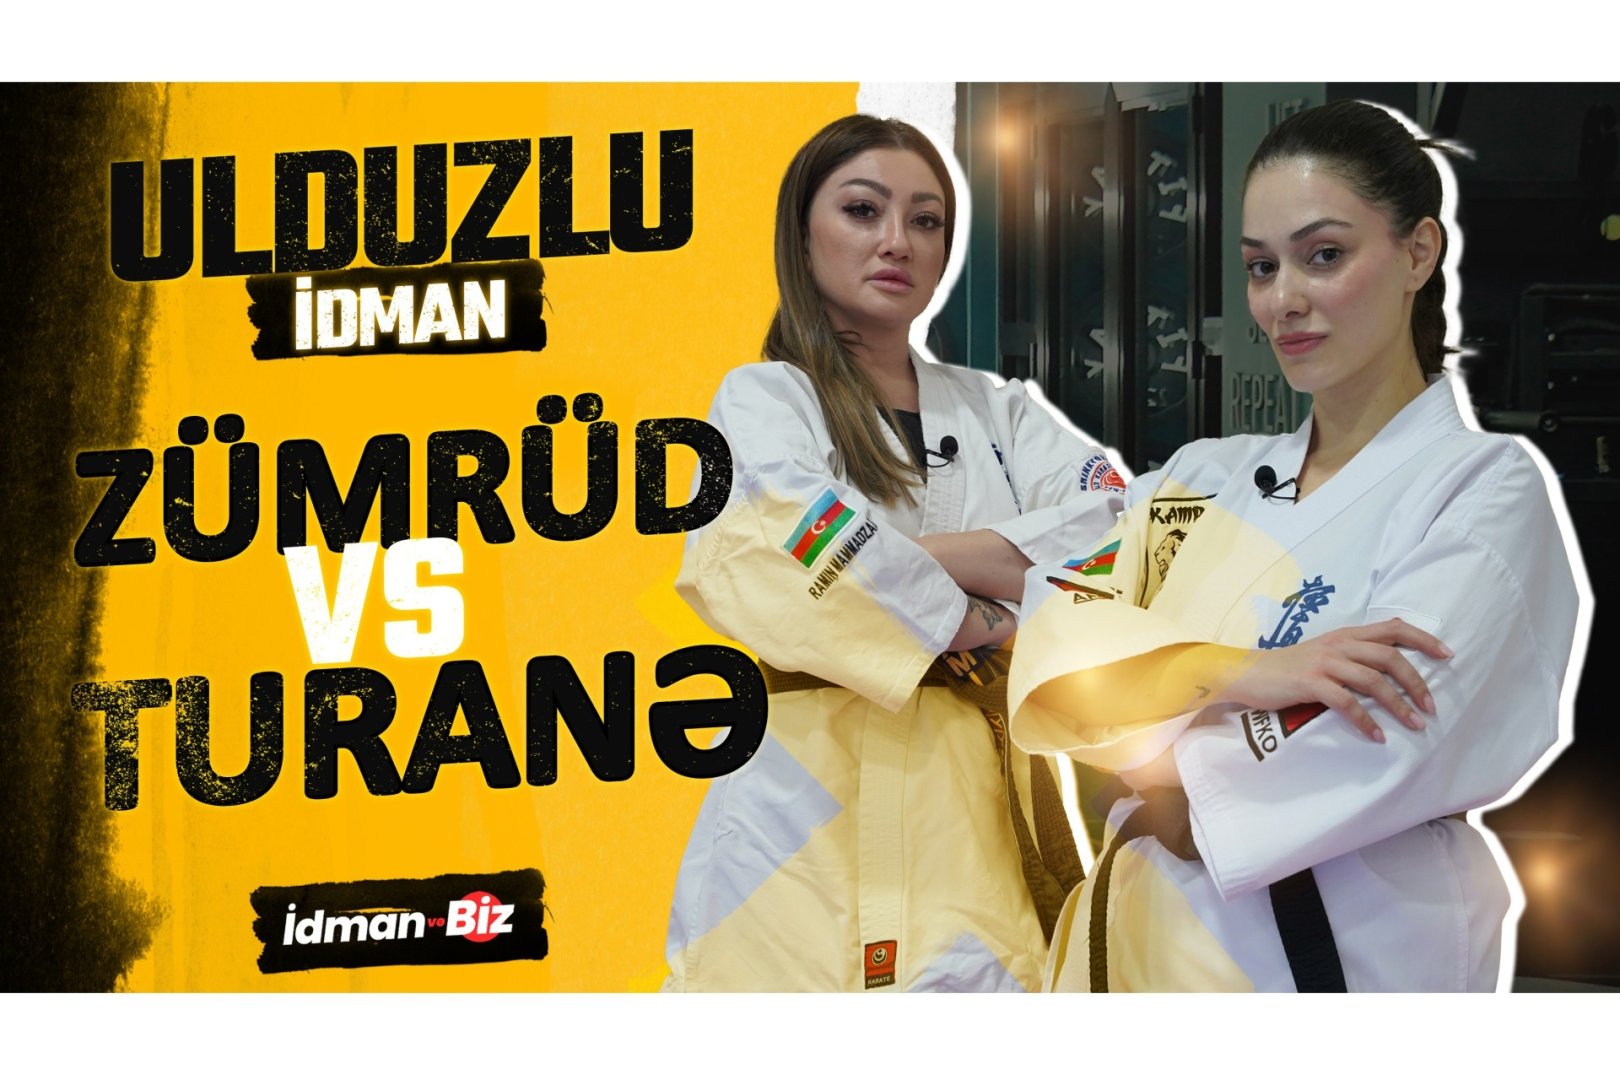 Azerbaijani TV presenter takes on physical challenges on Ulduzlu Idman project (VIDEO)